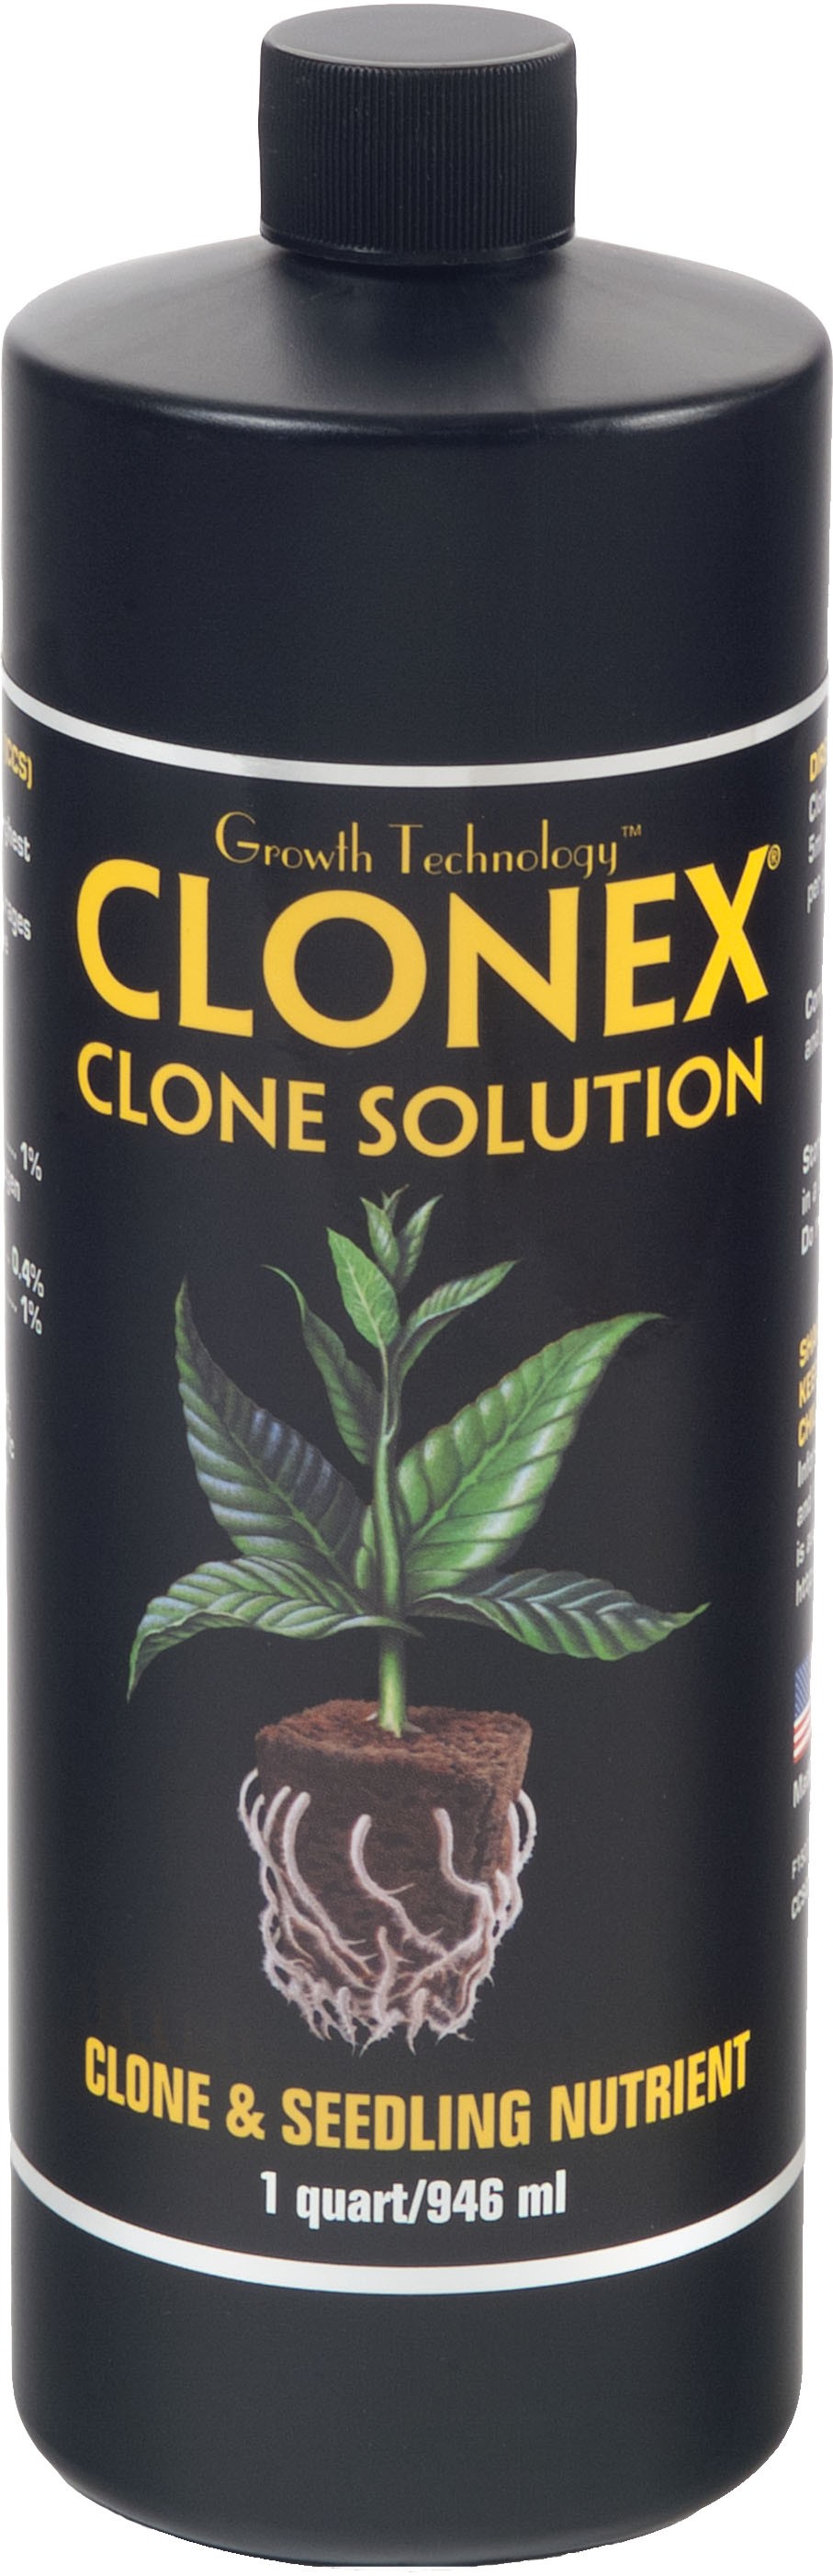 Clonex Clone Solution quart